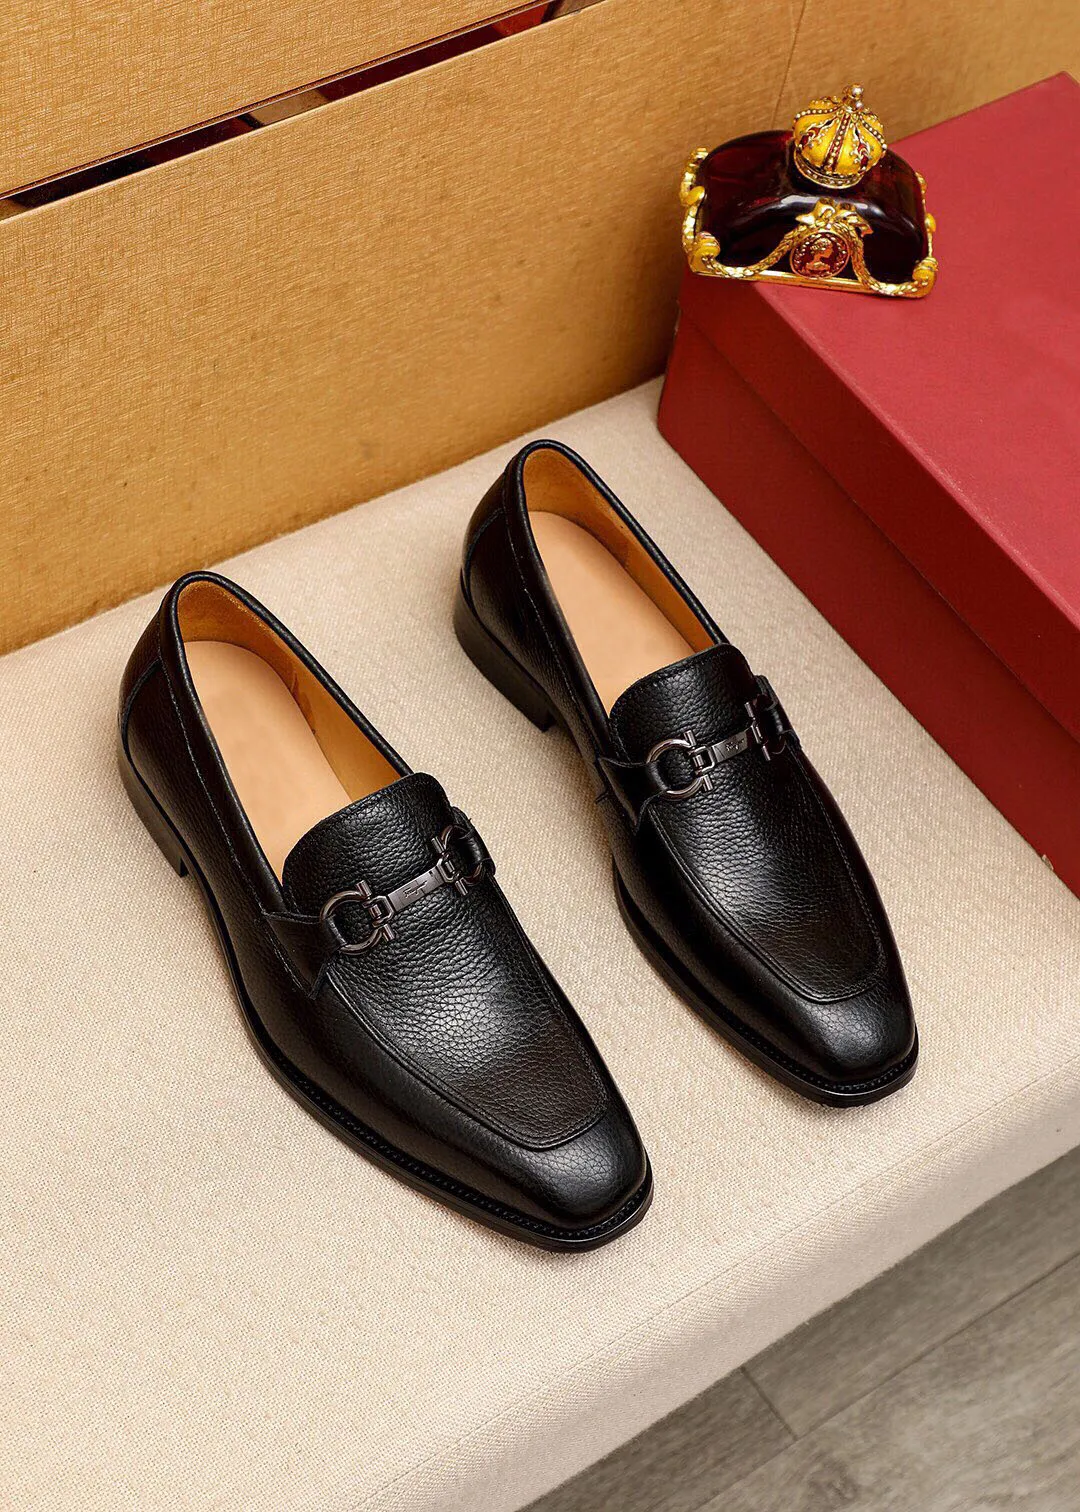 Feragamo Mens Genuine Leather Brogue Most Comfortable Formal Shoes ...